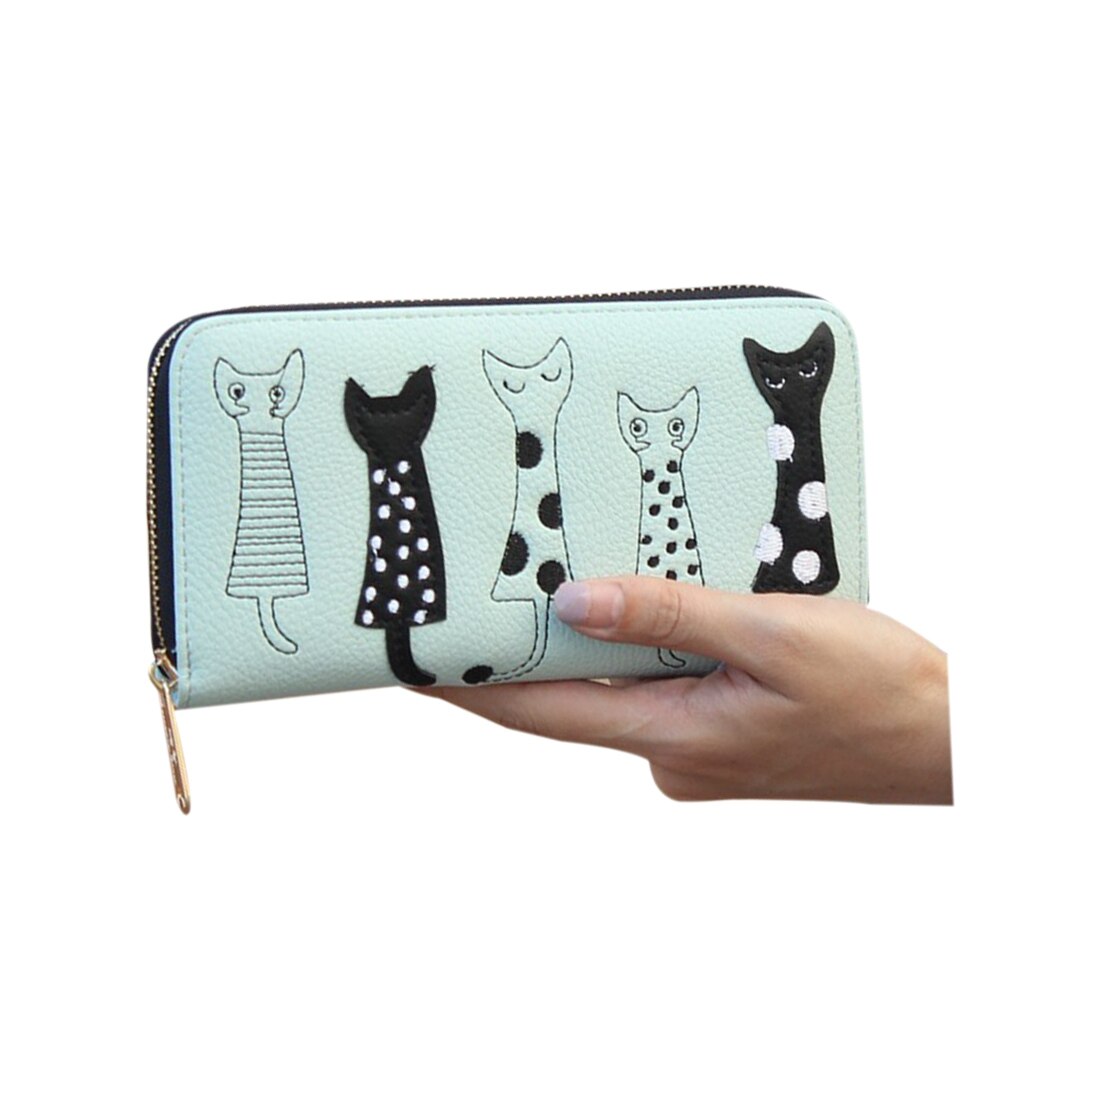 New Fashion Women Cat Wallet Long Cartoon purse Female Card Holder Lady clutch coin purse Female zipper 6 colors - ebowsos